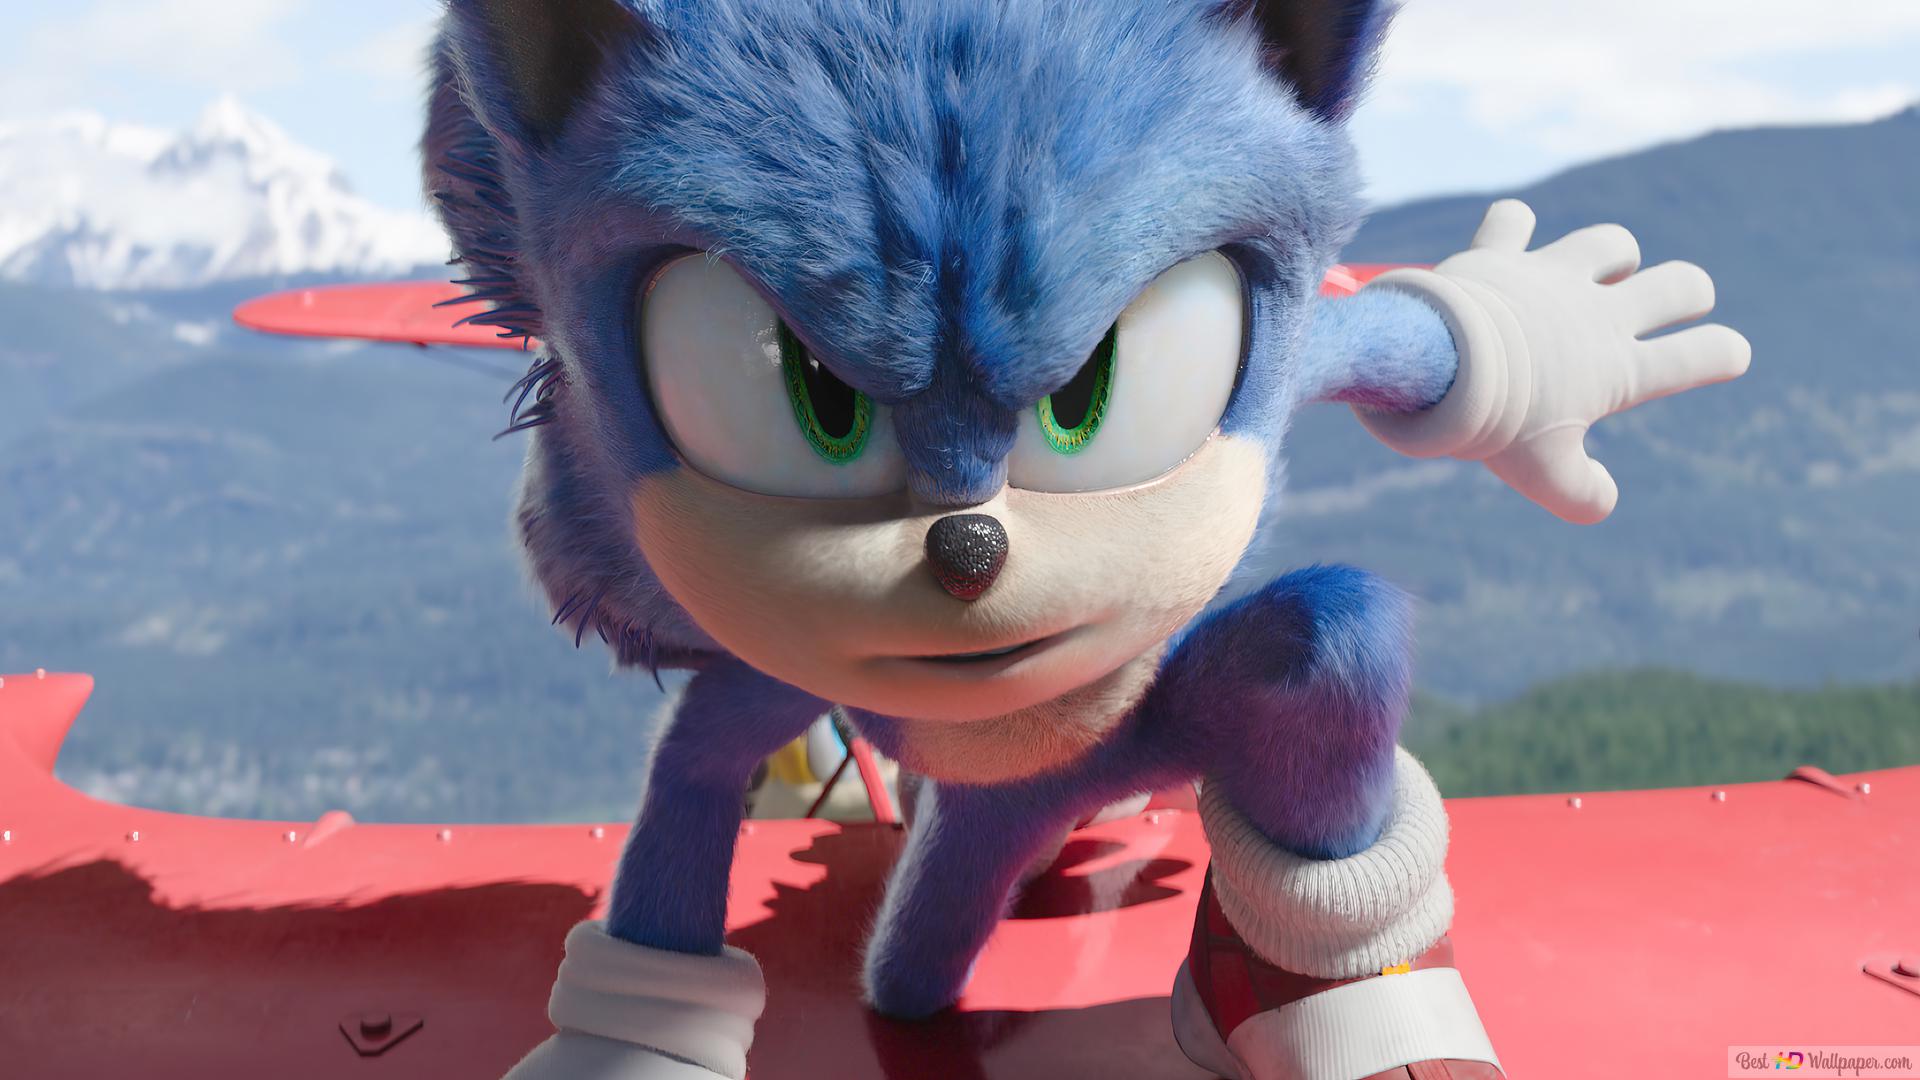 سونیک روی هواپیما در فیلم Sonic the Hedgehog 2